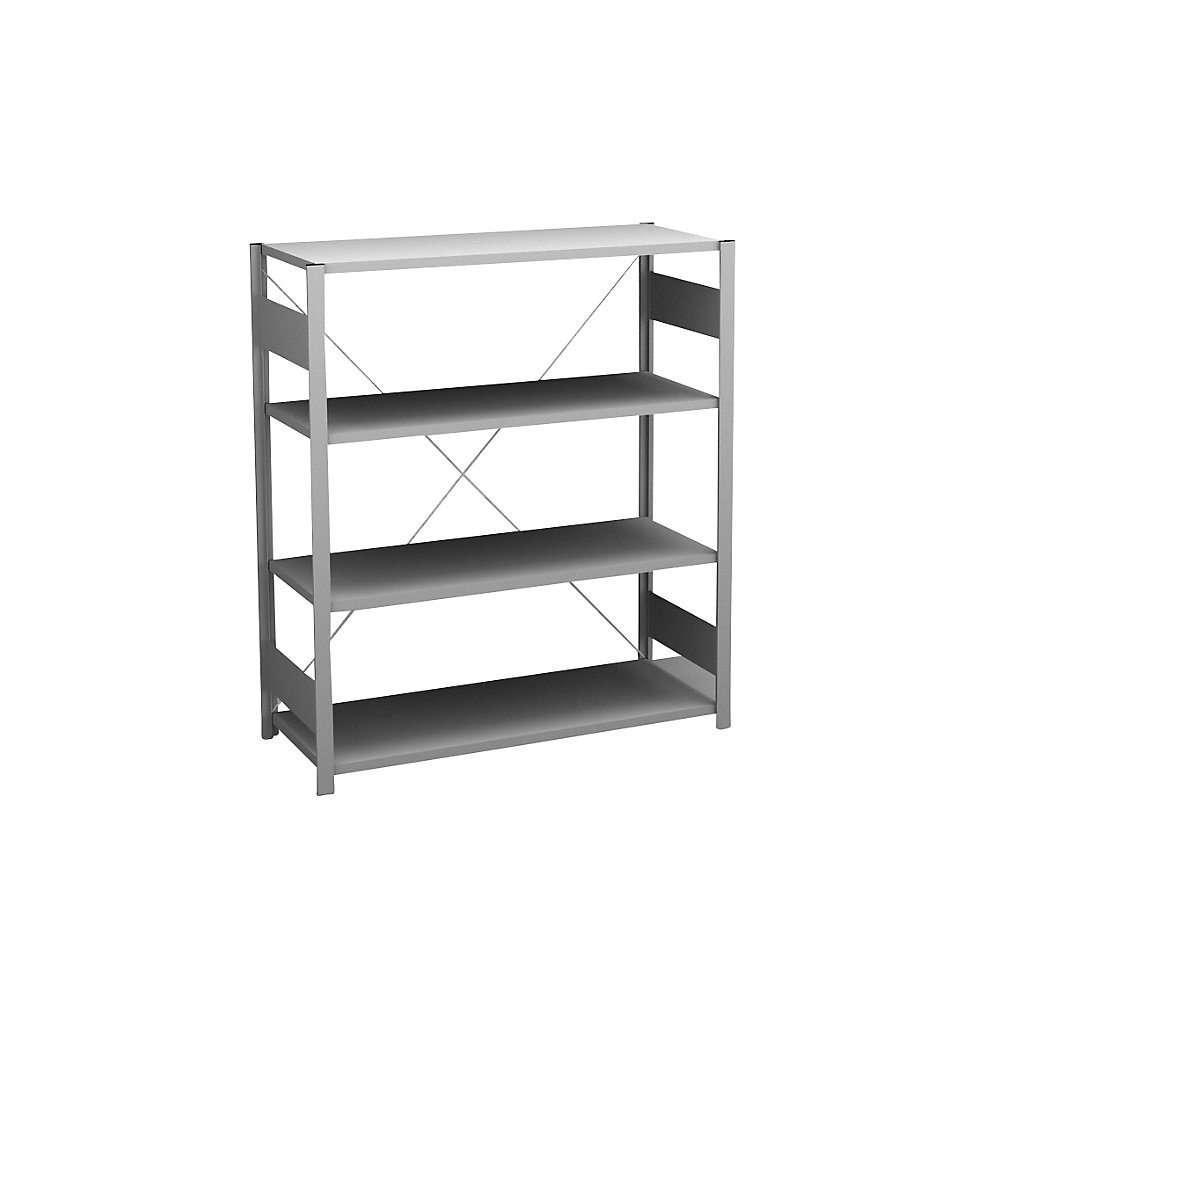 Zinc plated sideboard shelving unit – hofe, height 1200 mm, 4 shelves, standard shelf unit, shelf depth 400 mm, max. shelf load 145 kg-3